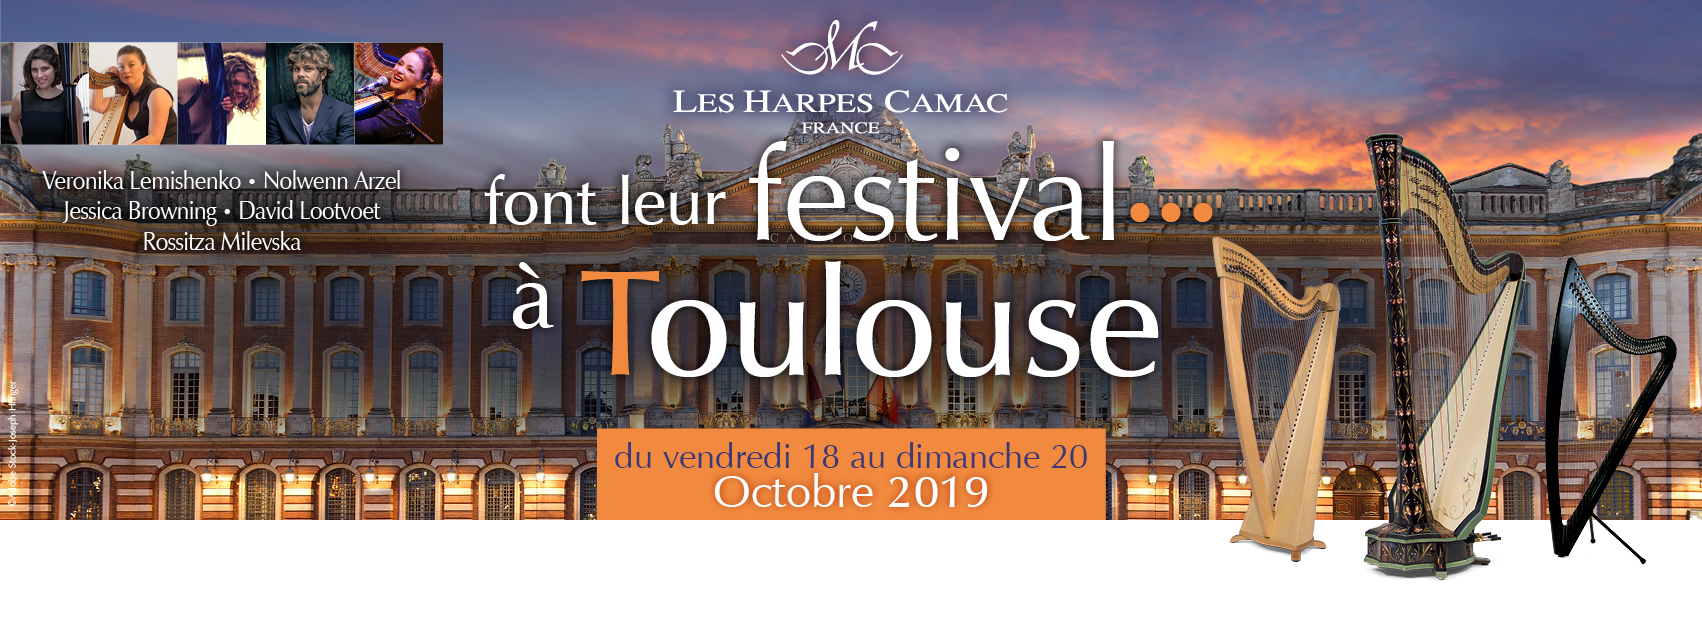 Festival Camac, Toulouse 2019